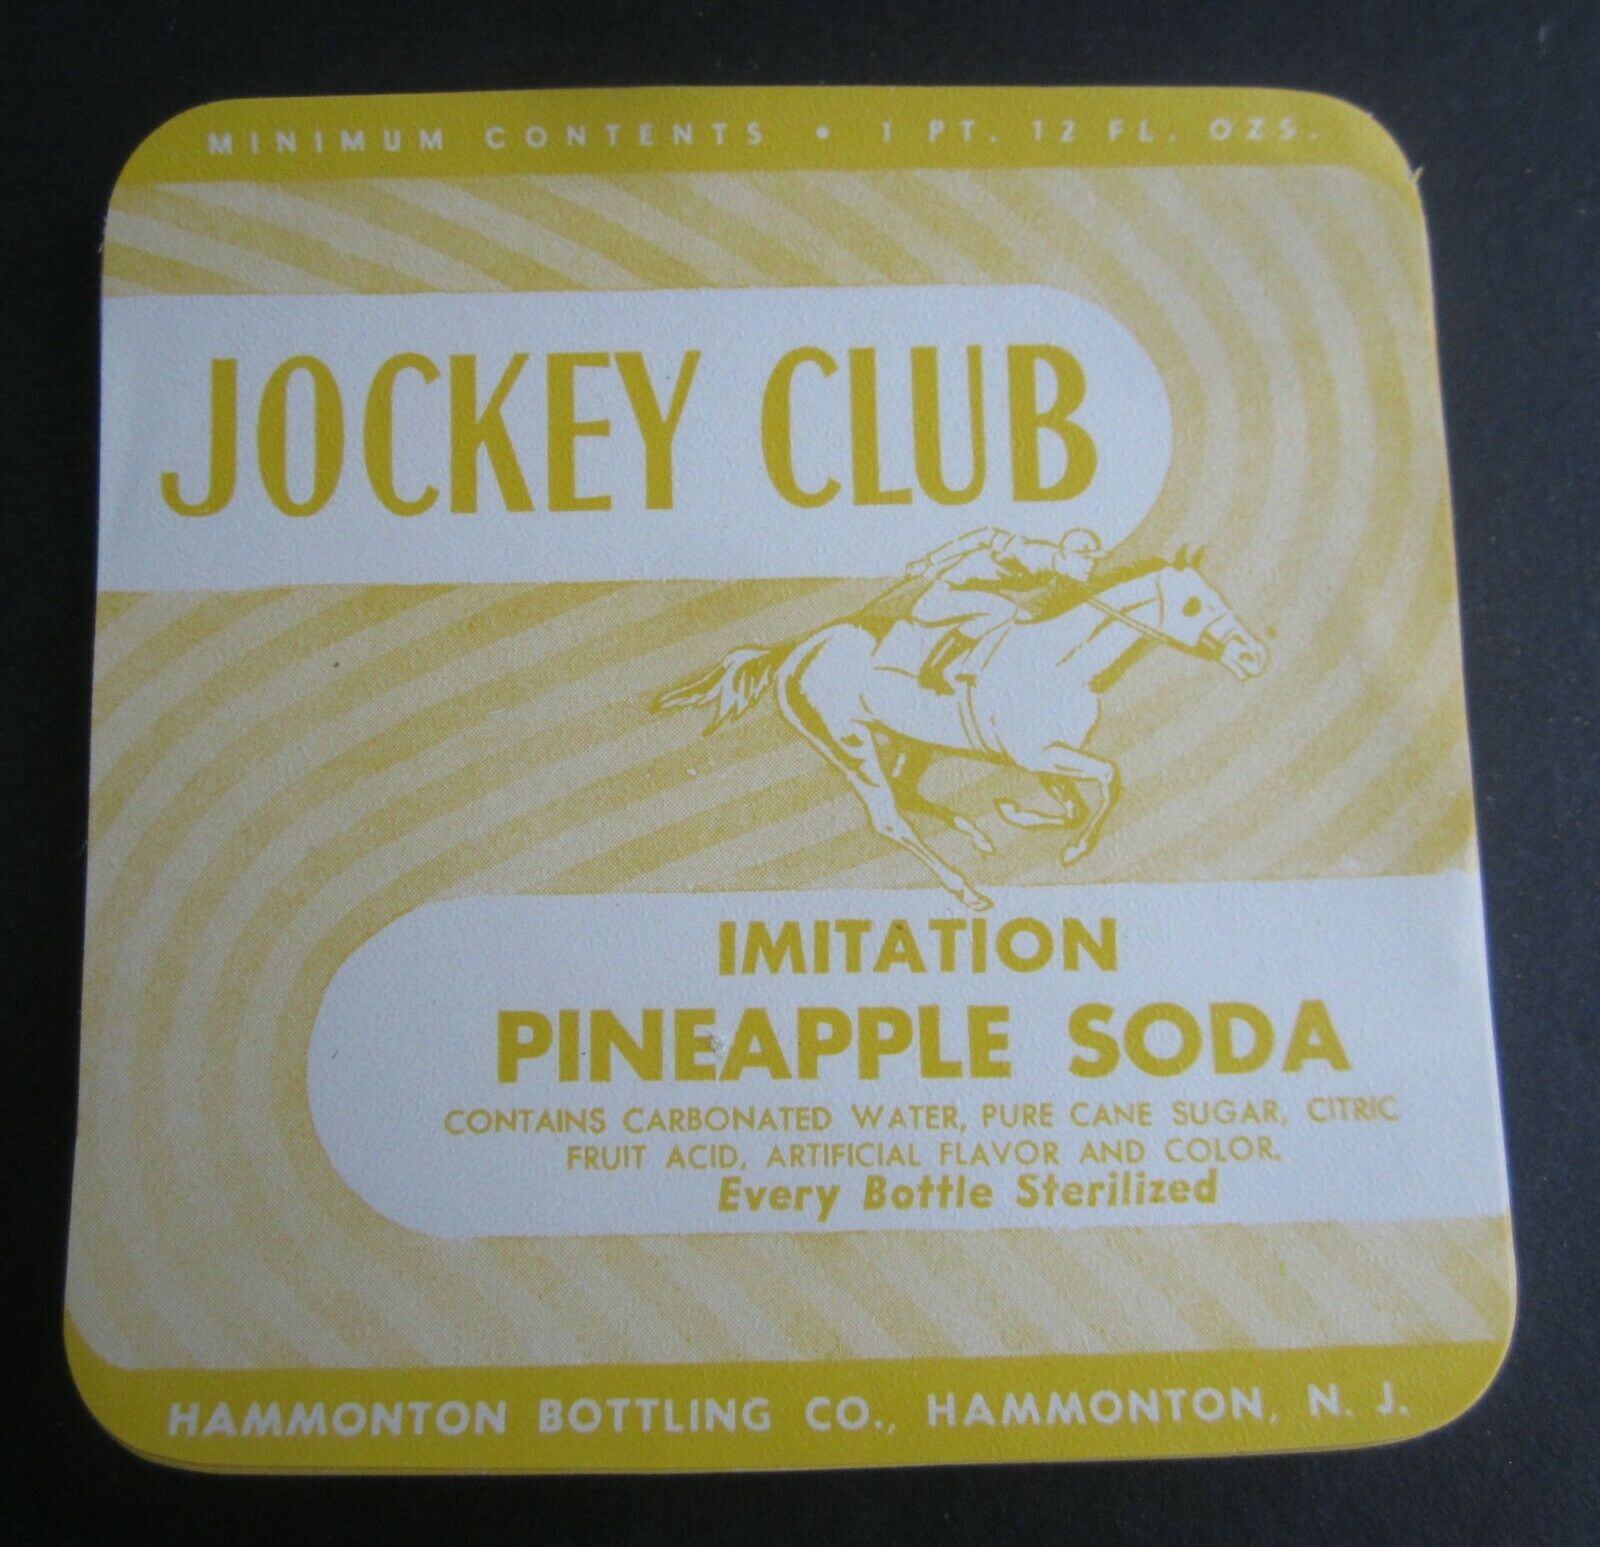  Lot of 50 Old Vintage - JOCKEY CLUB - Pineappl...